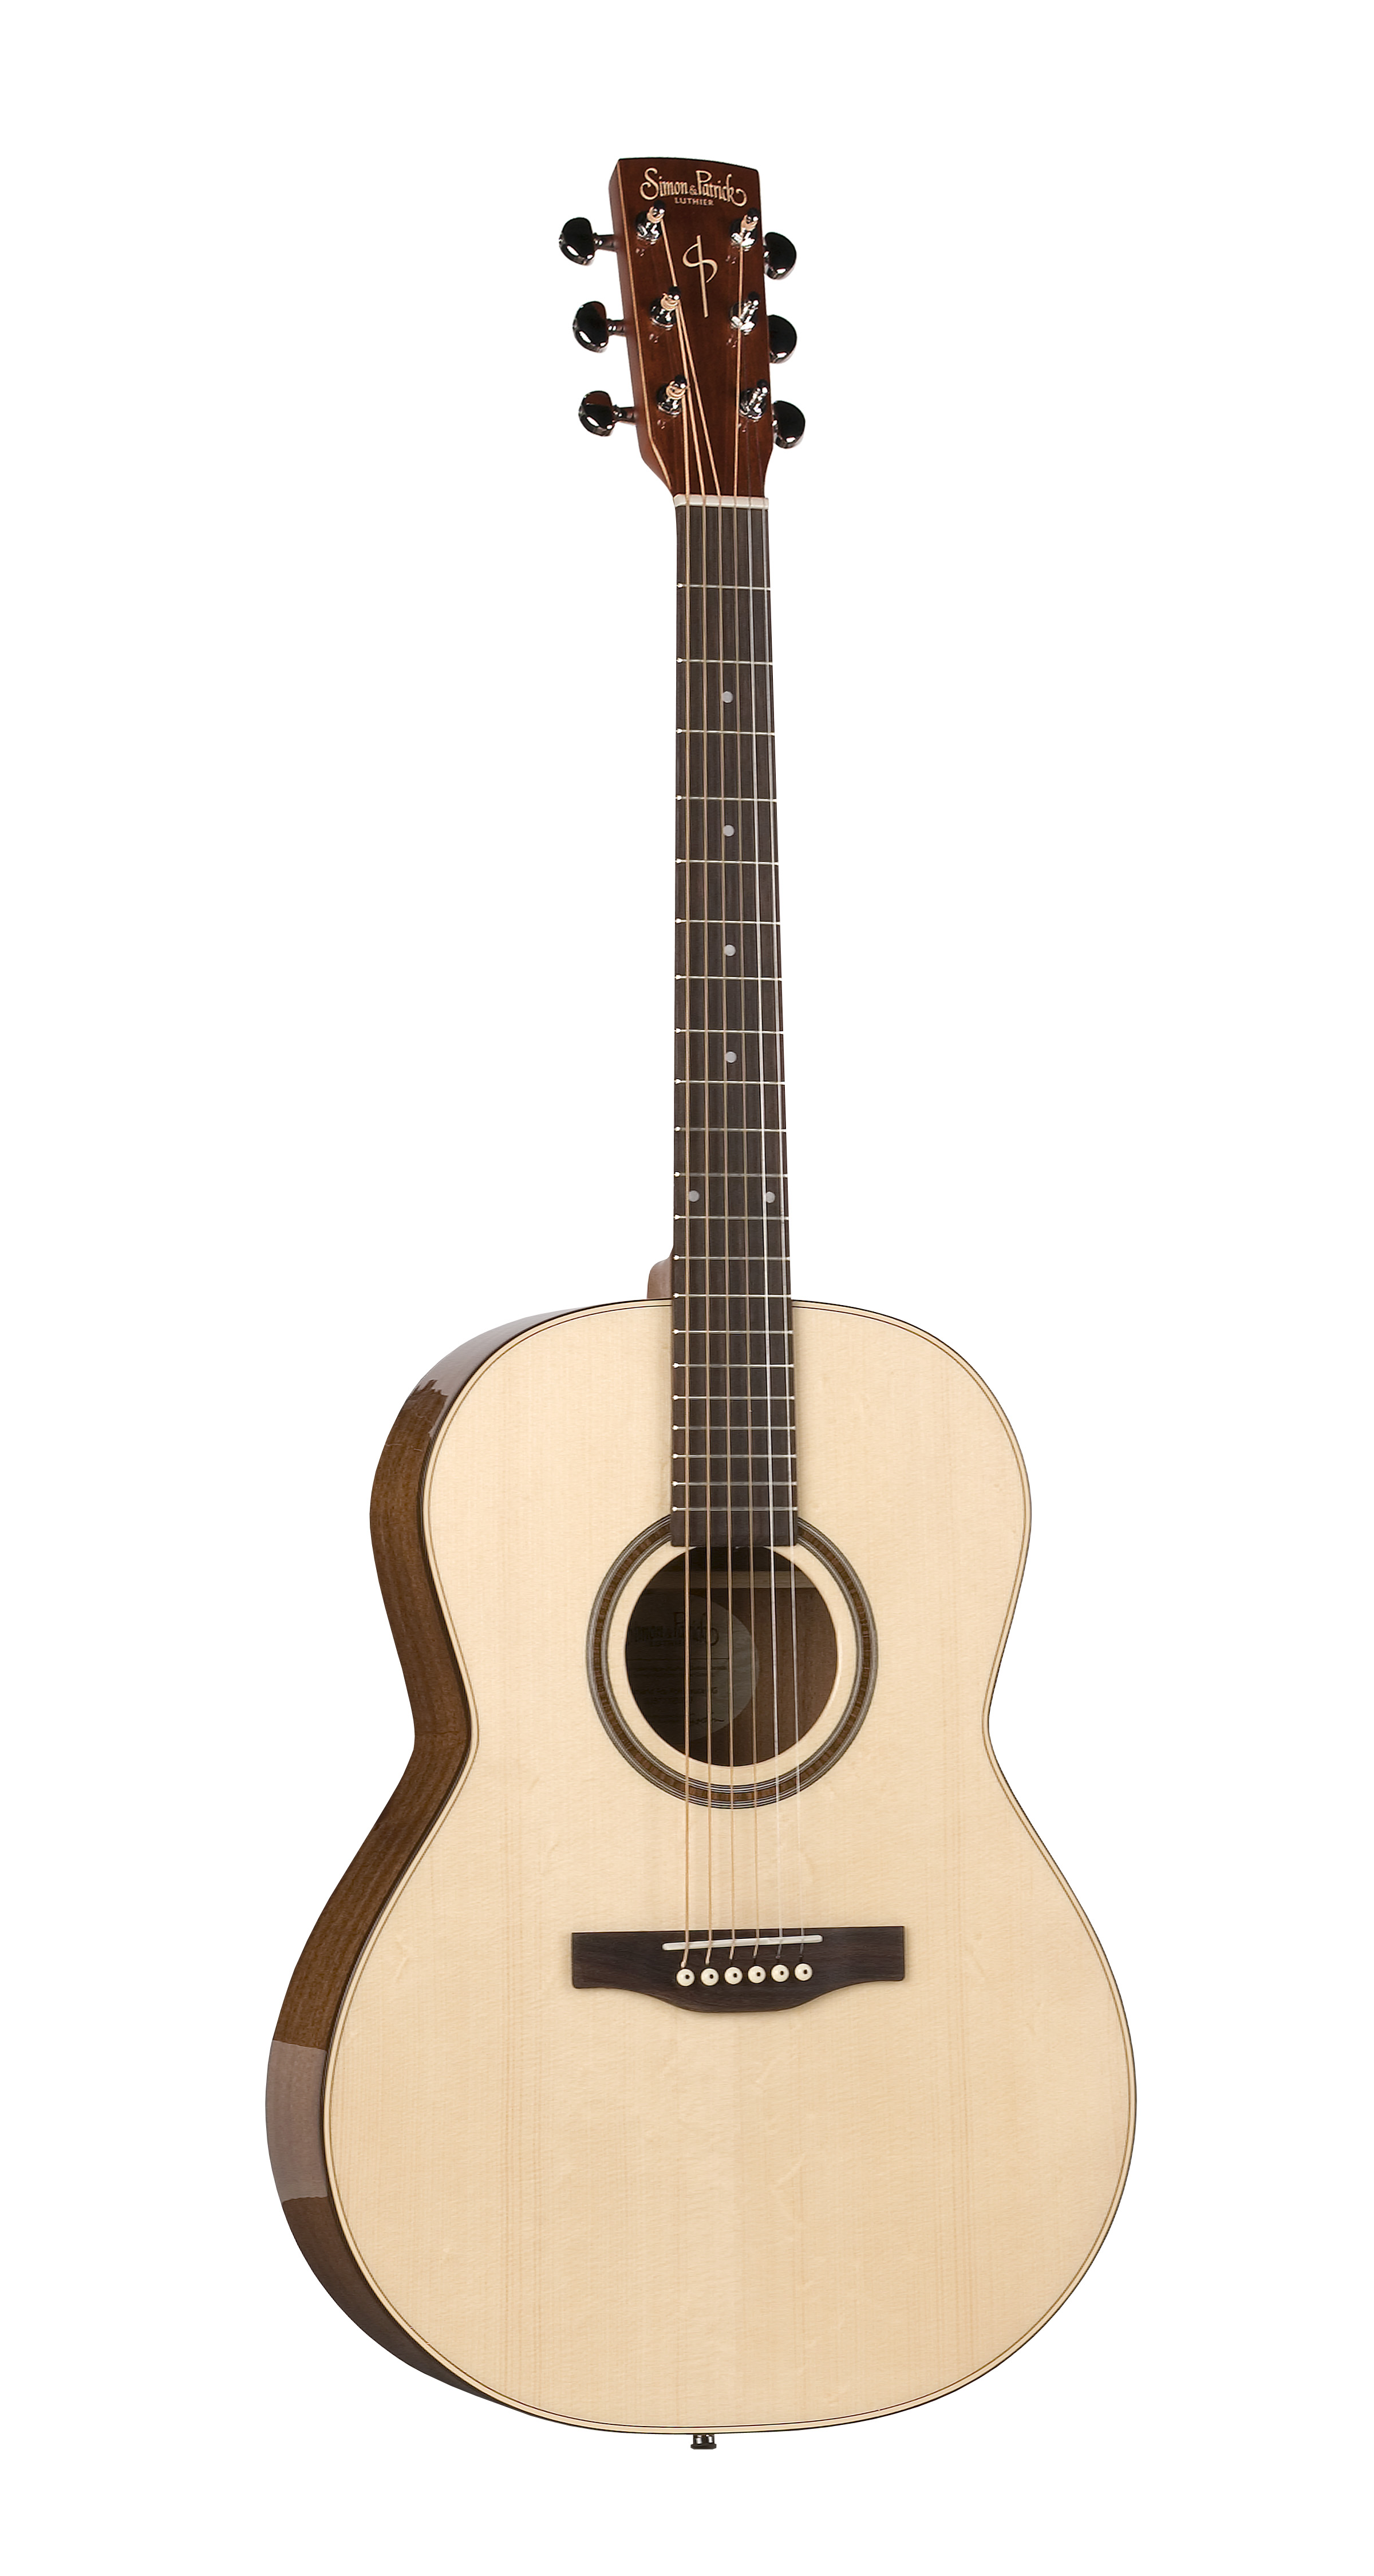 Simon & Patrick 33713 Woodland Pro Folk Spruce Acoustic Guitar